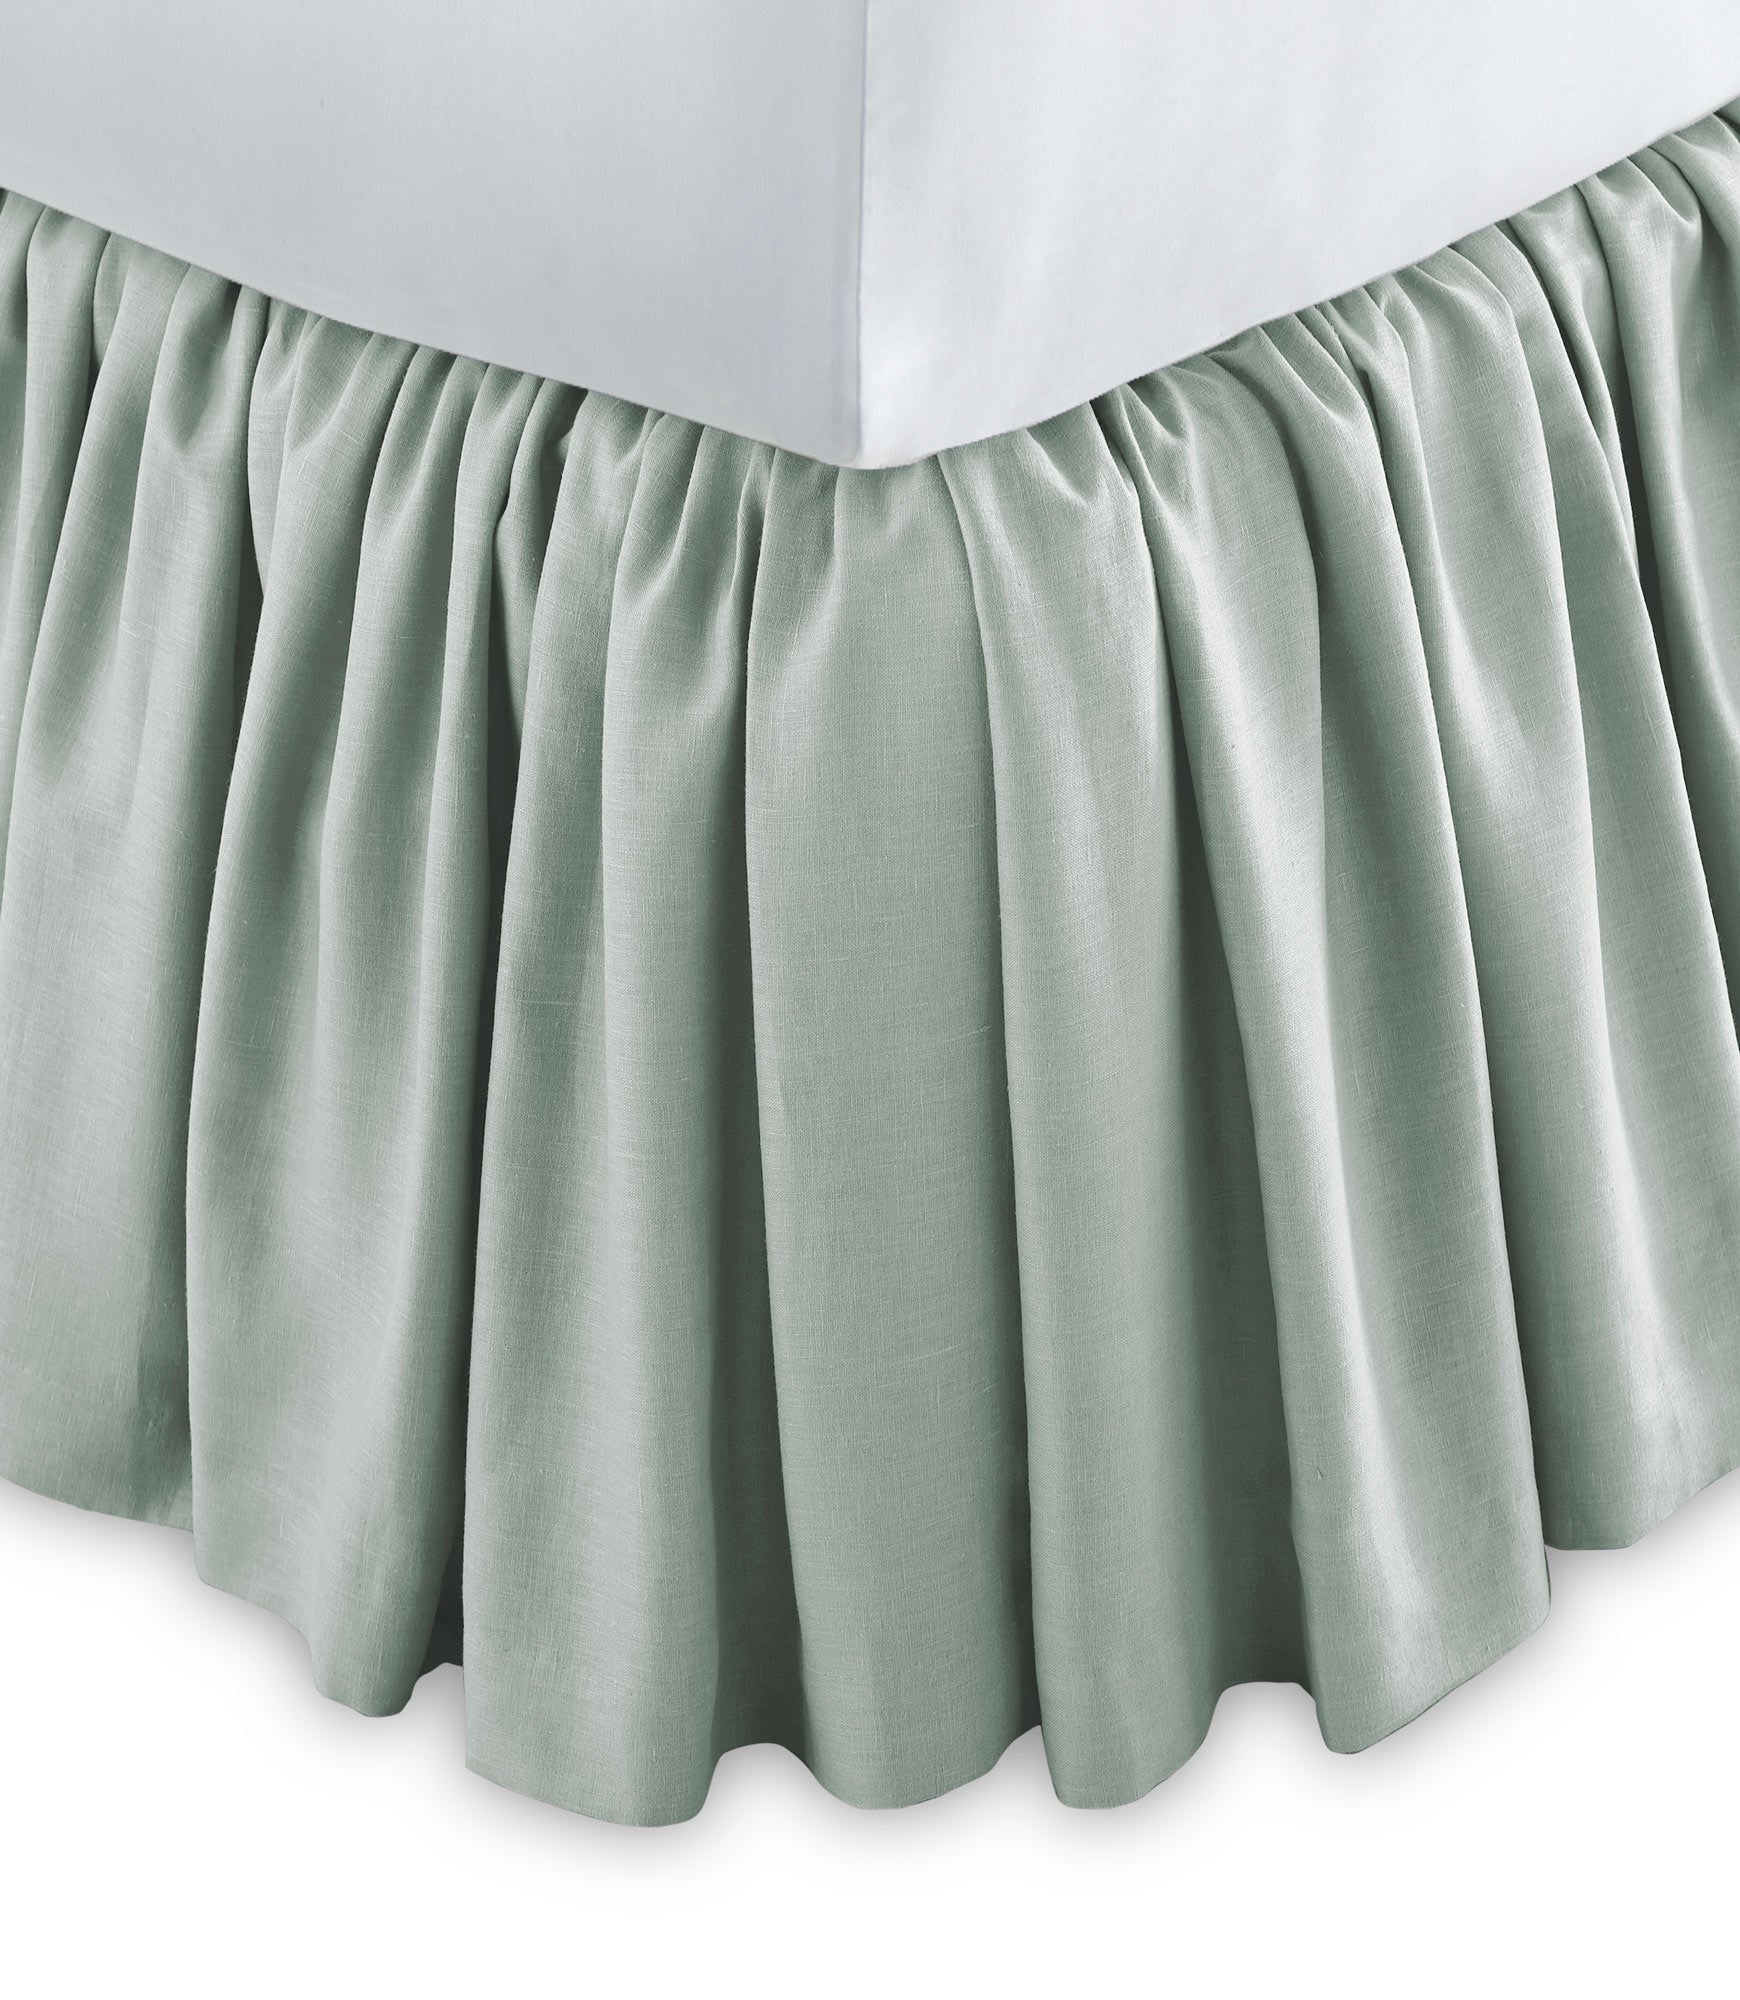 Mandalay Ruffled Linen Bed Skirt